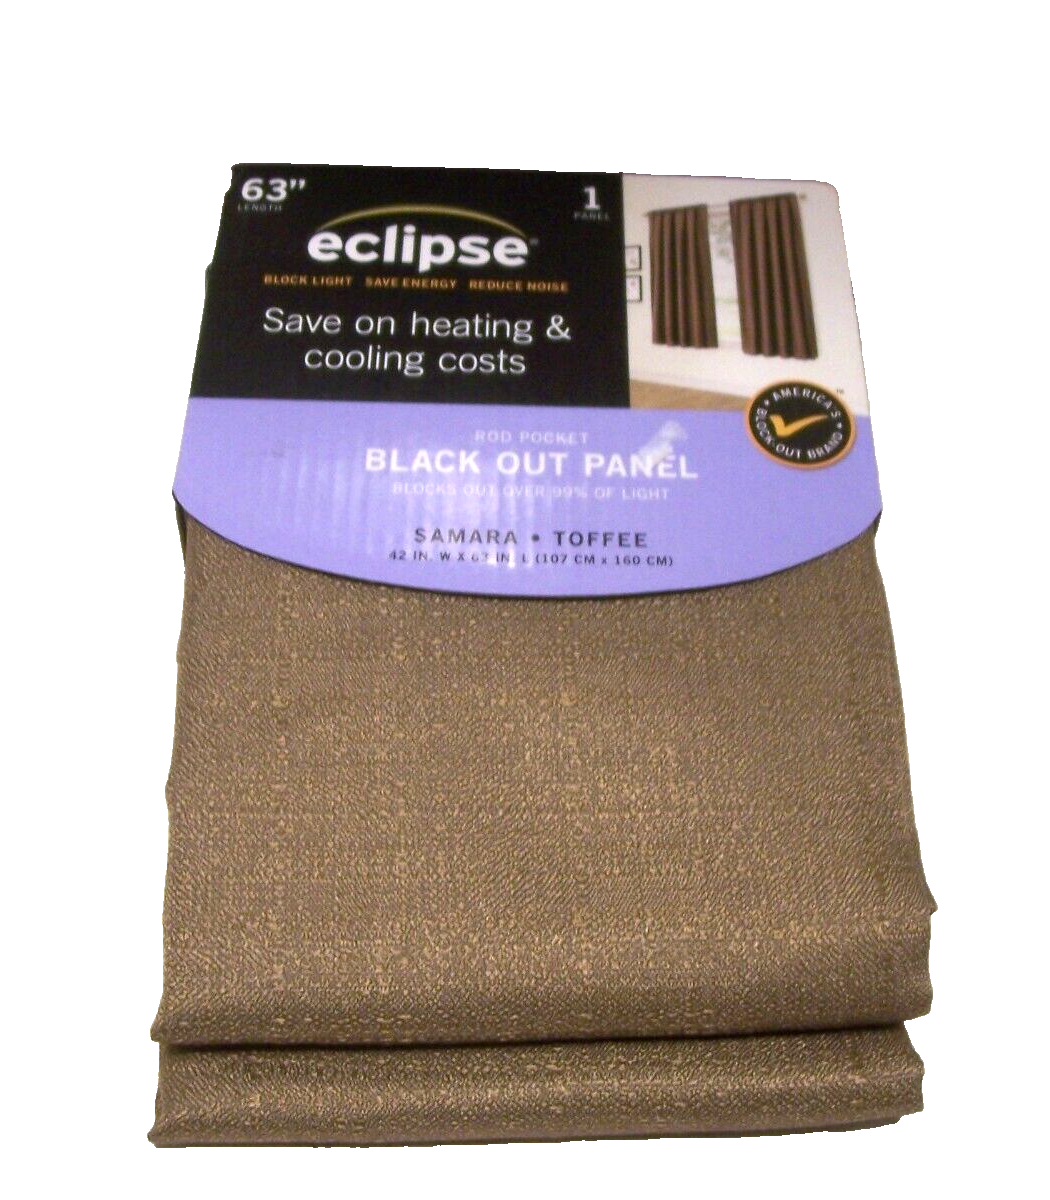 NEW Eclipse Blackout Panel Curtain 42" W x 63" L ONE PANEL Samara/Toffee - $14.82